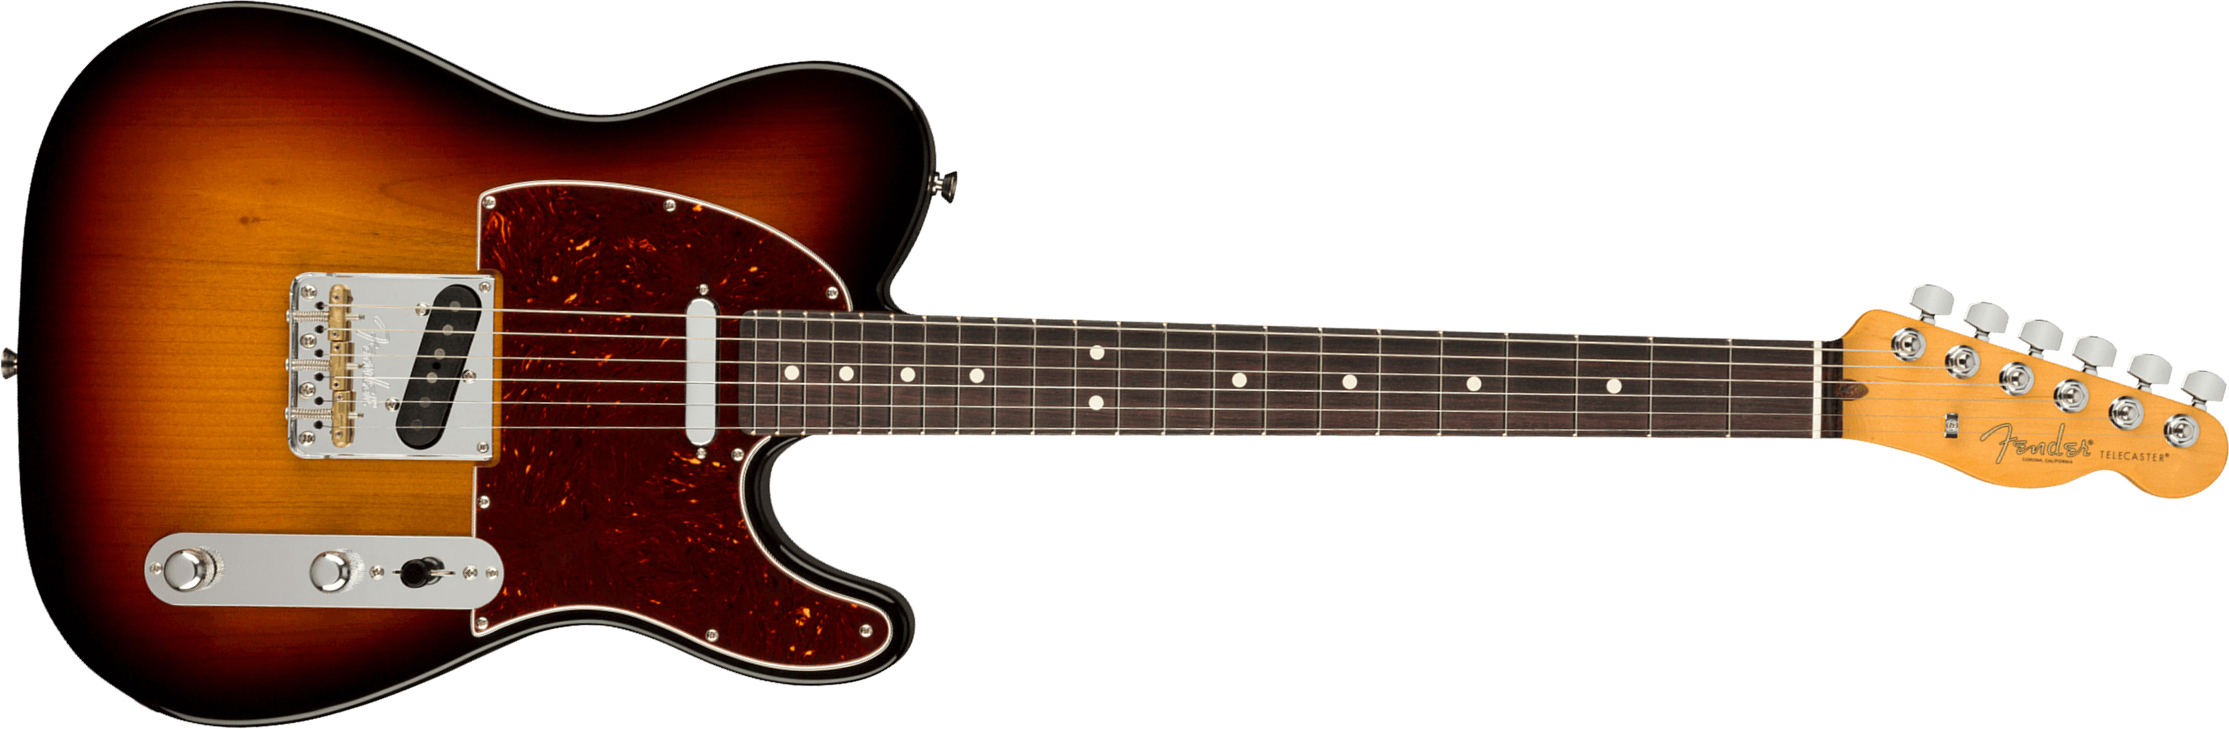 Fender Tele American Professional Ii Usa Rw - 3-color Sunburst - Guitarra eléctrica con forma de tel - Main picture